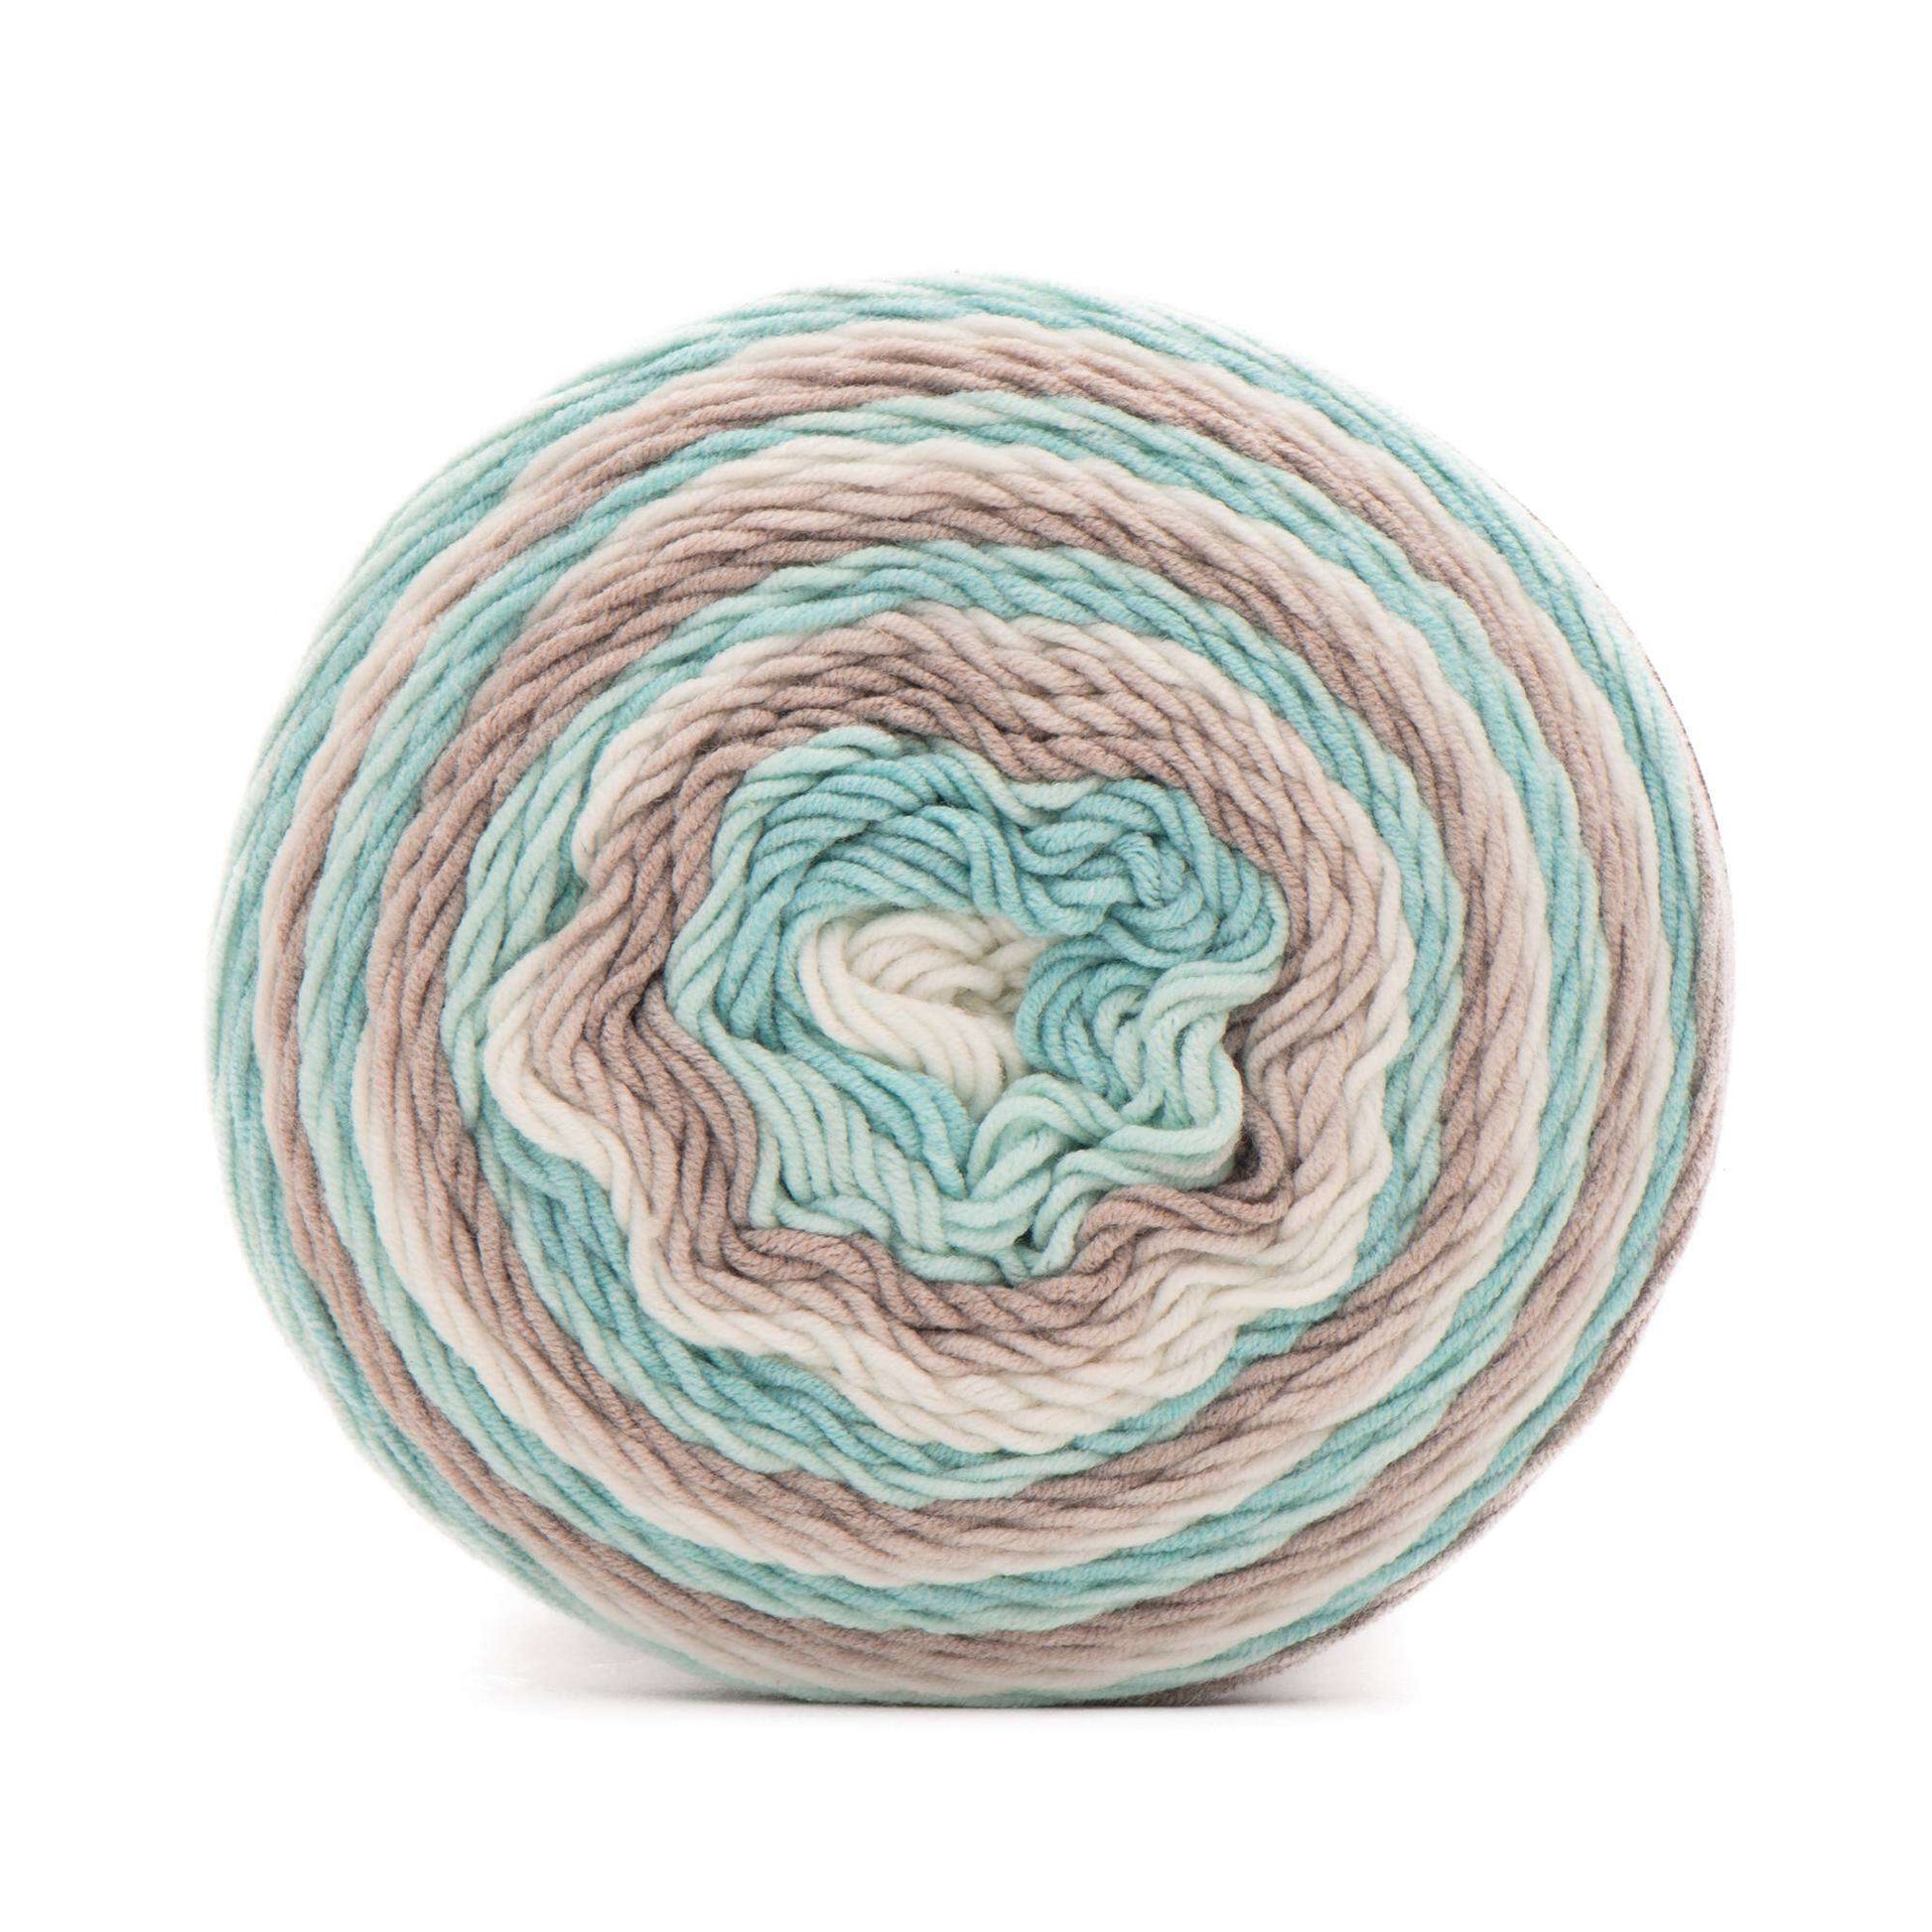 Caron Cotton Cakes Yarn (250g/8.8oz) - Discontinued shades